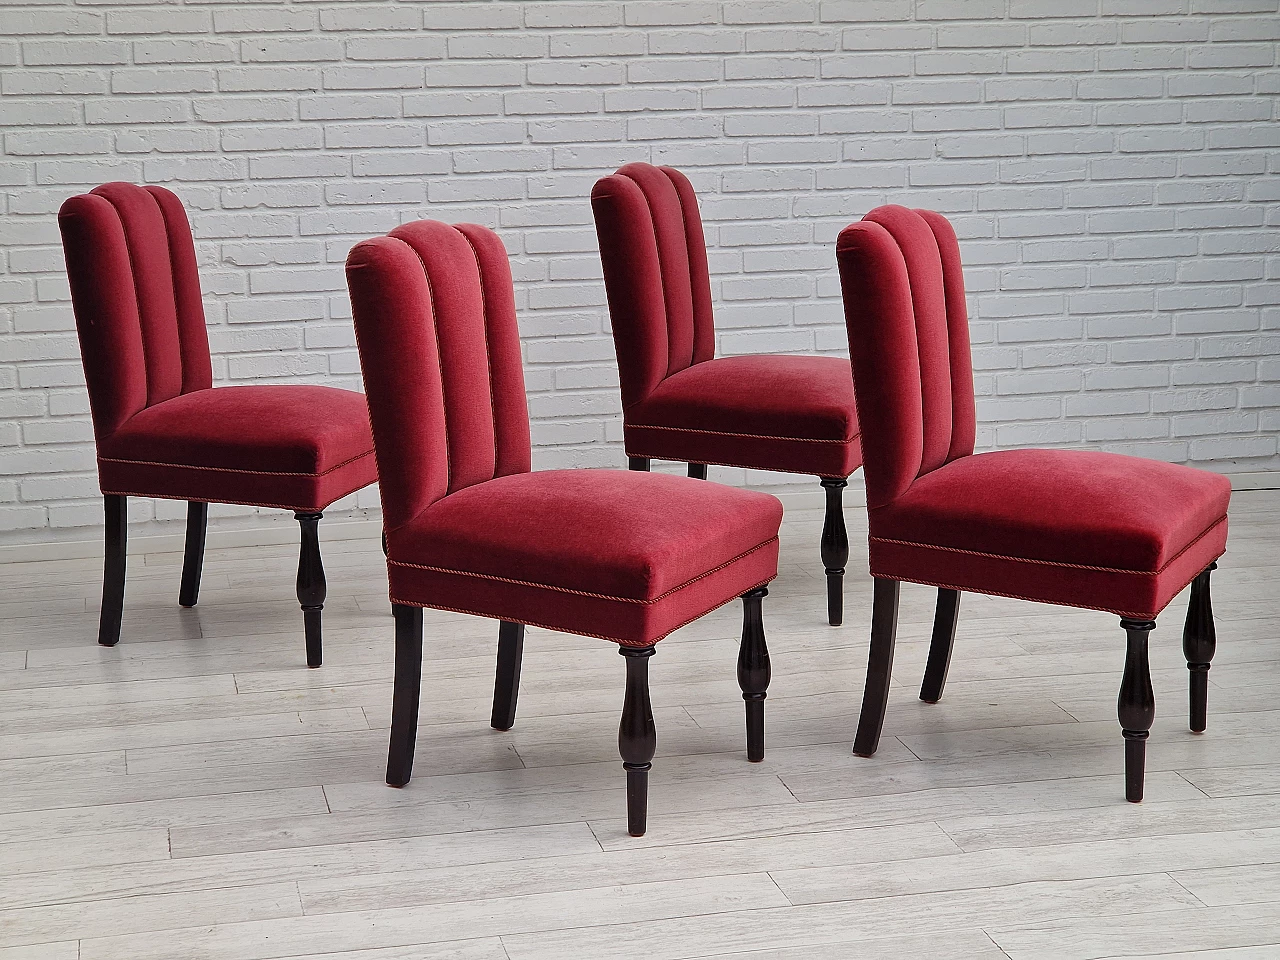 4 Danish oak chairs with cherry red velvet upholstery, 1950s 2